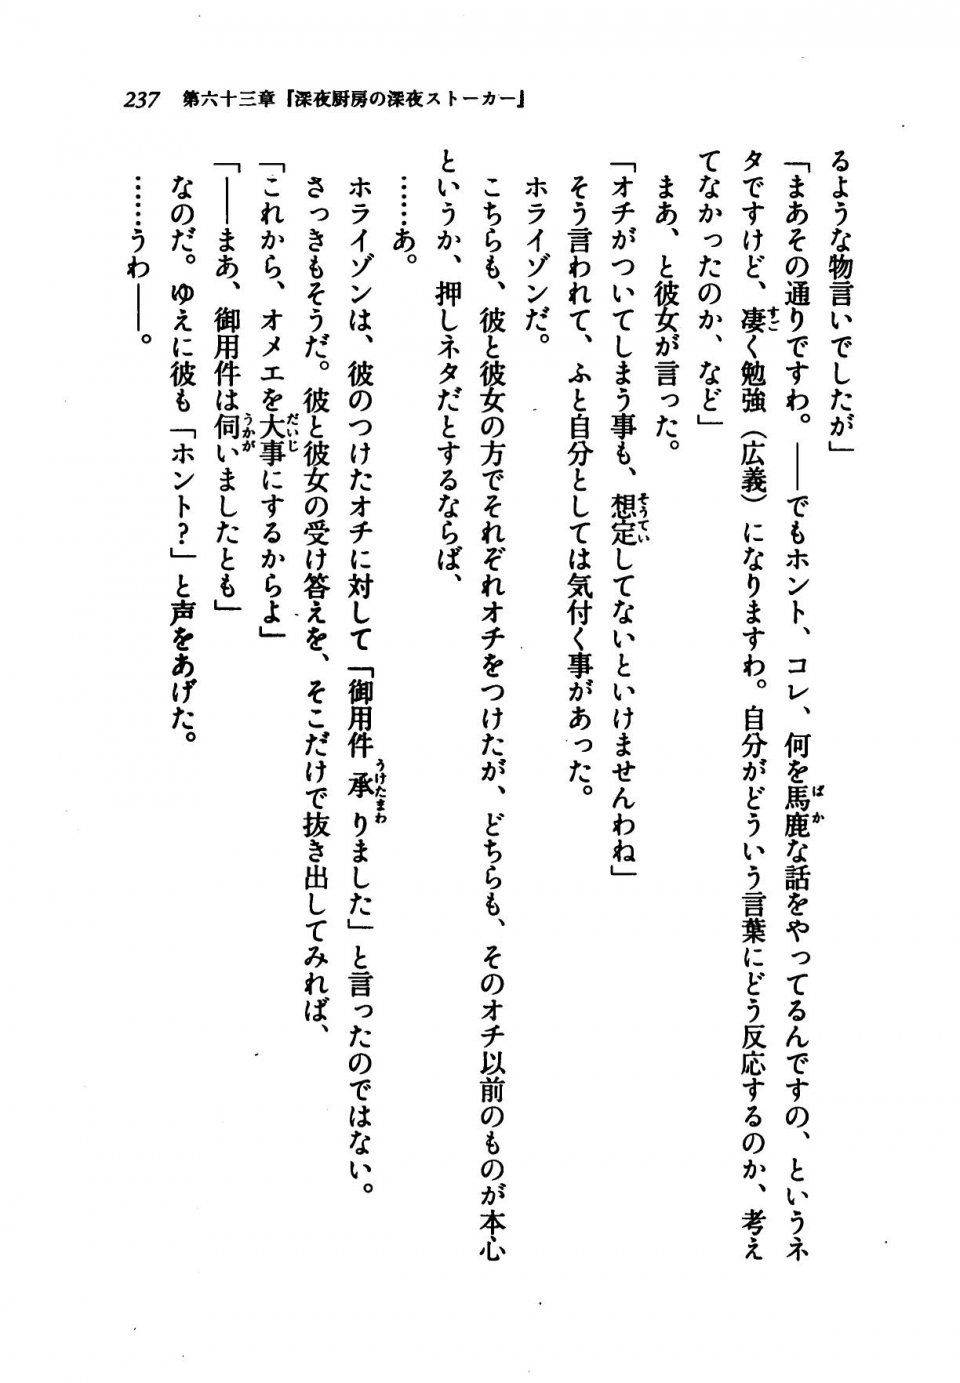 Kyoukai Senjou no Horizon LN Vol 21(8C) Part 1 - Photo #236